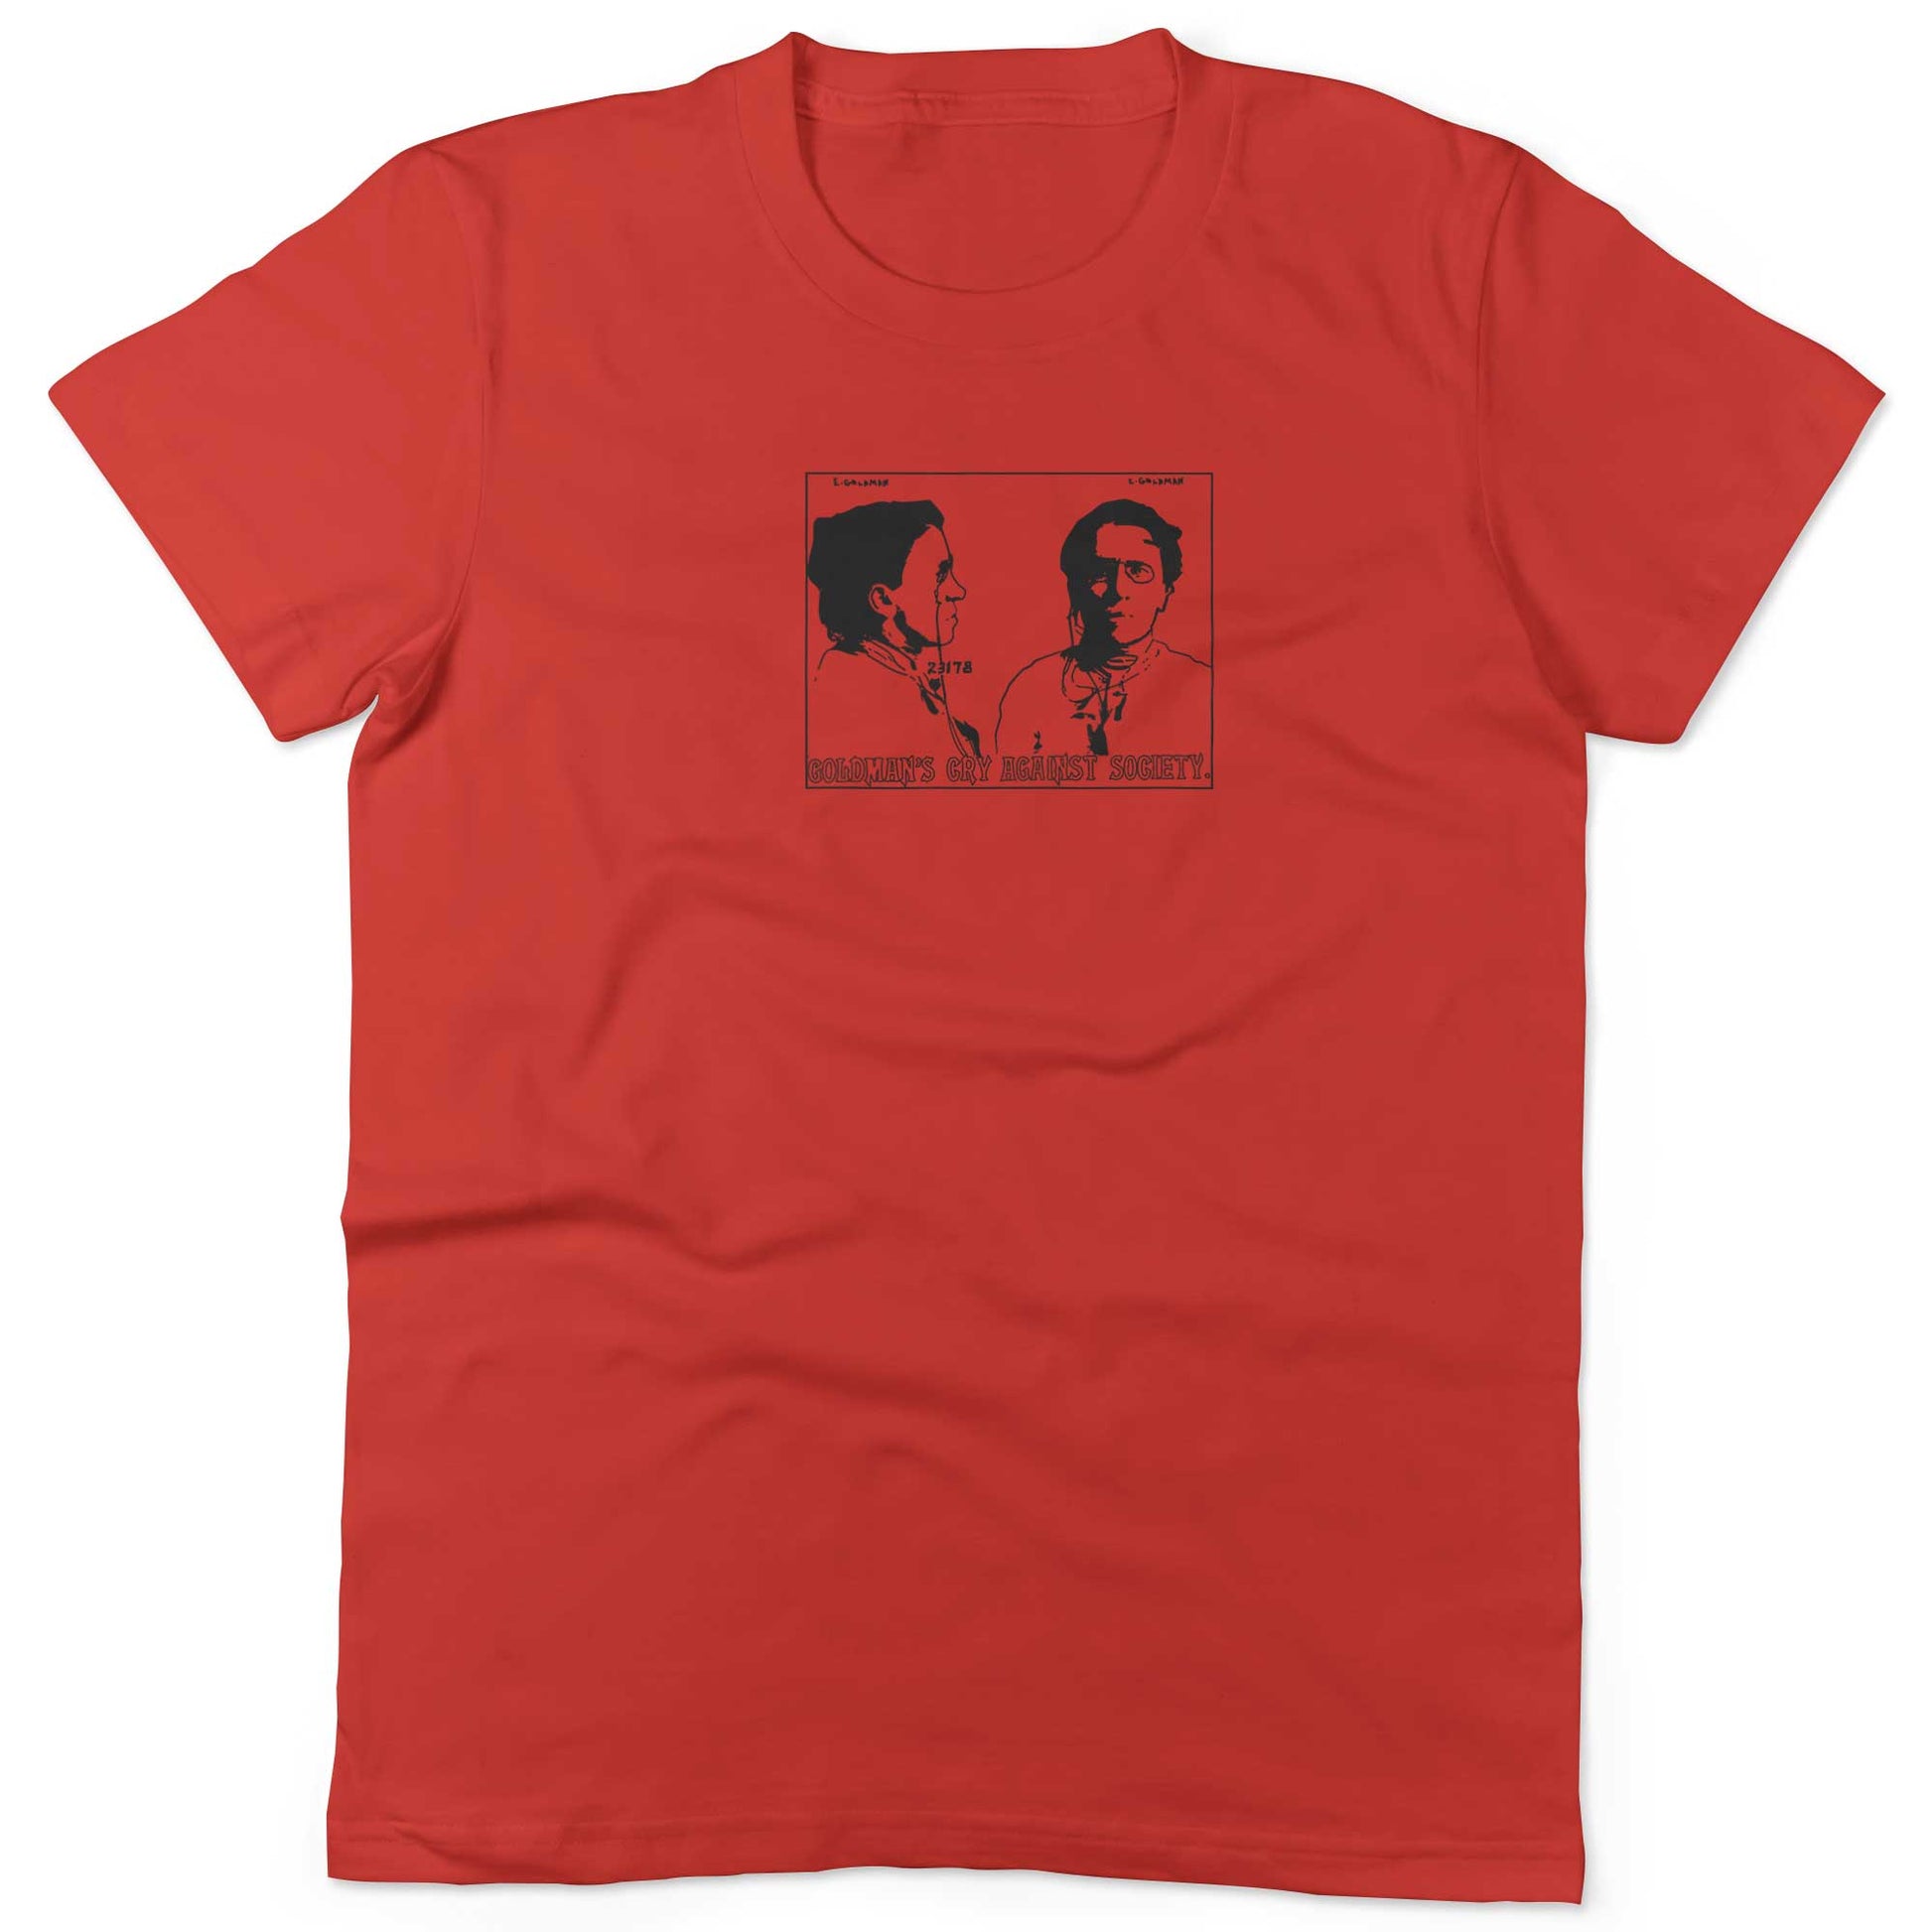 Emma Goldman Unisex Or Women's Cotton T-shirt-Red-Women